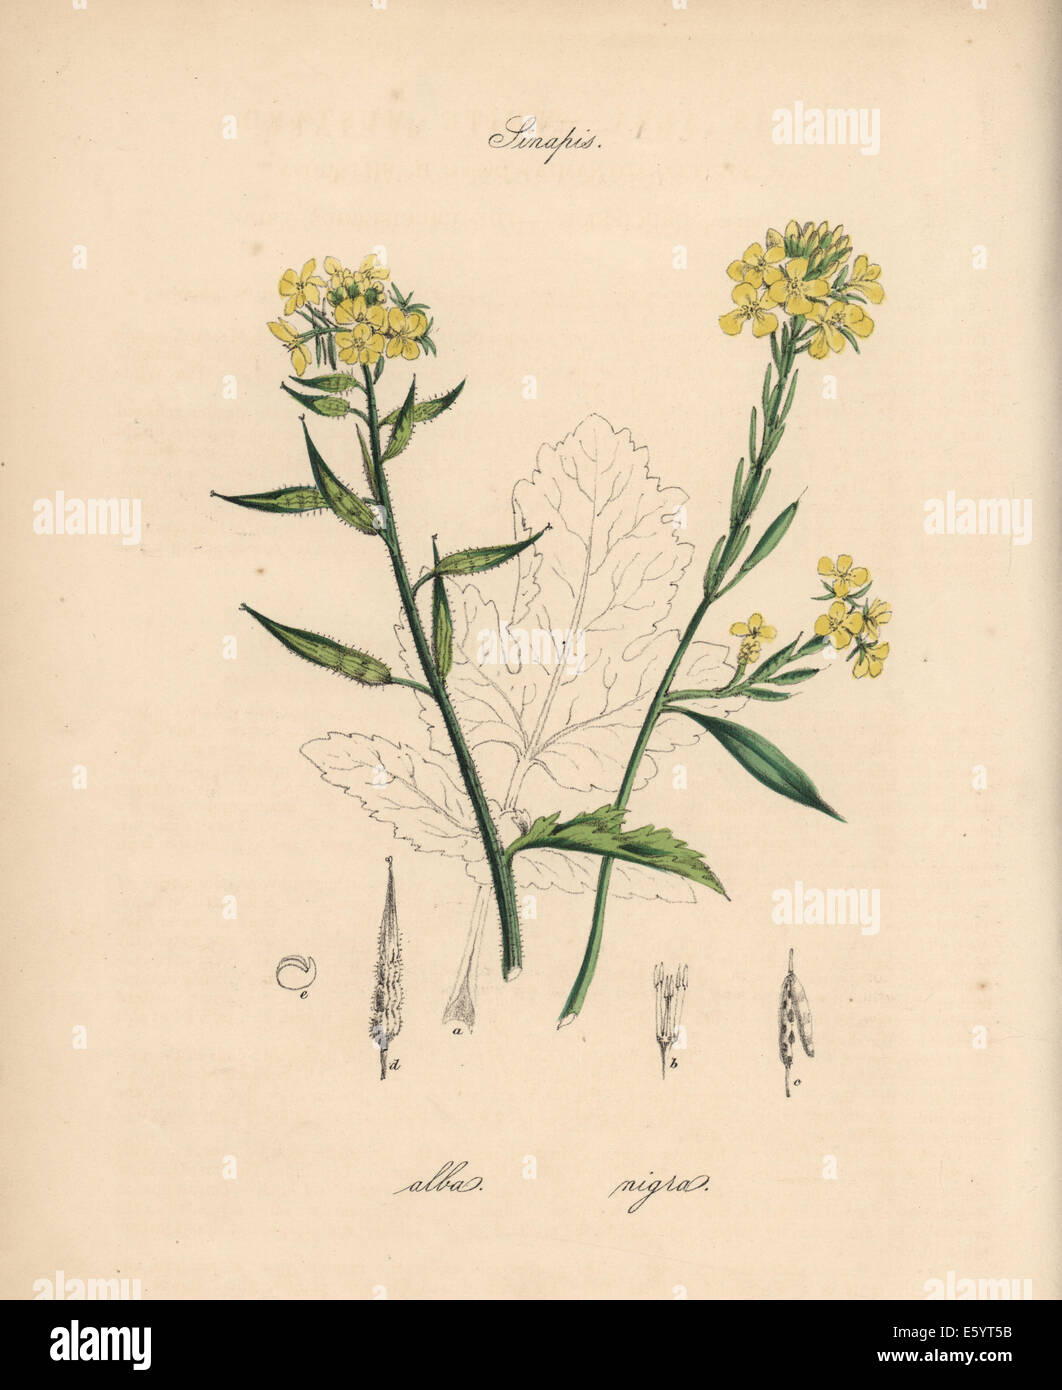 White and black mustard, Sinapis alba and Sinapis nigra. Stock Photo